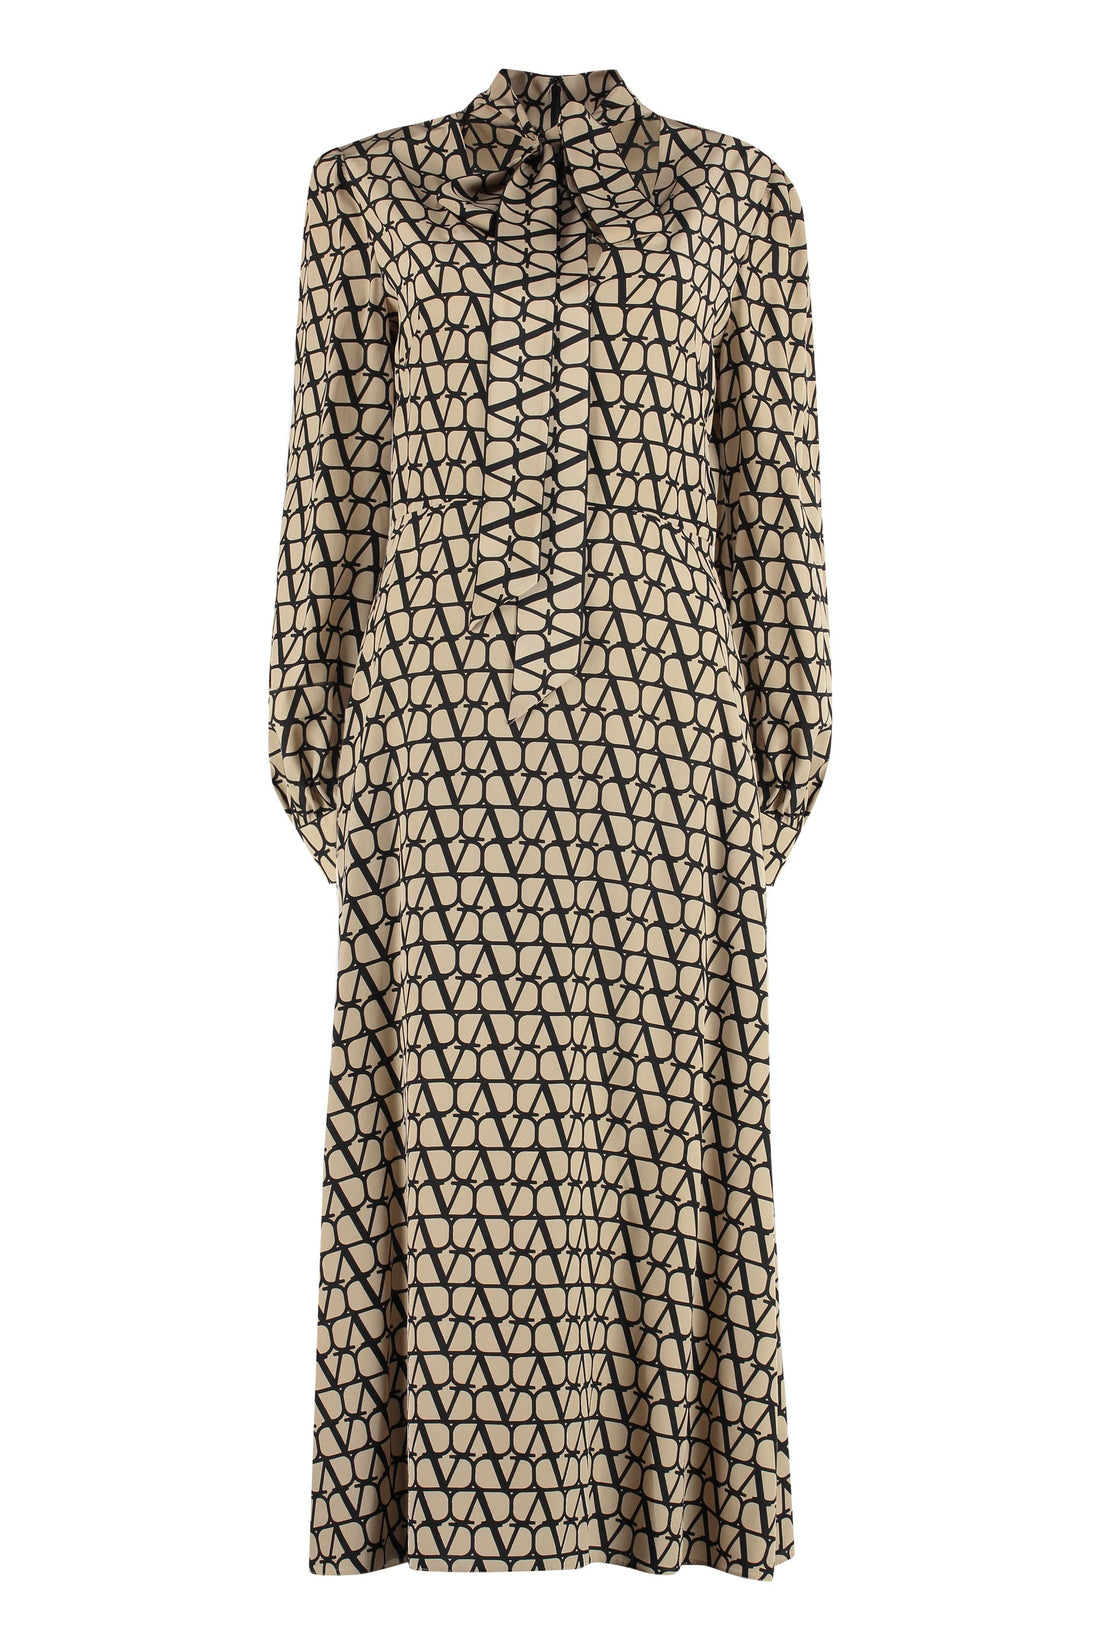 Valentino-OUTLET-SALE-Printed silk dress-ARCHIVIST